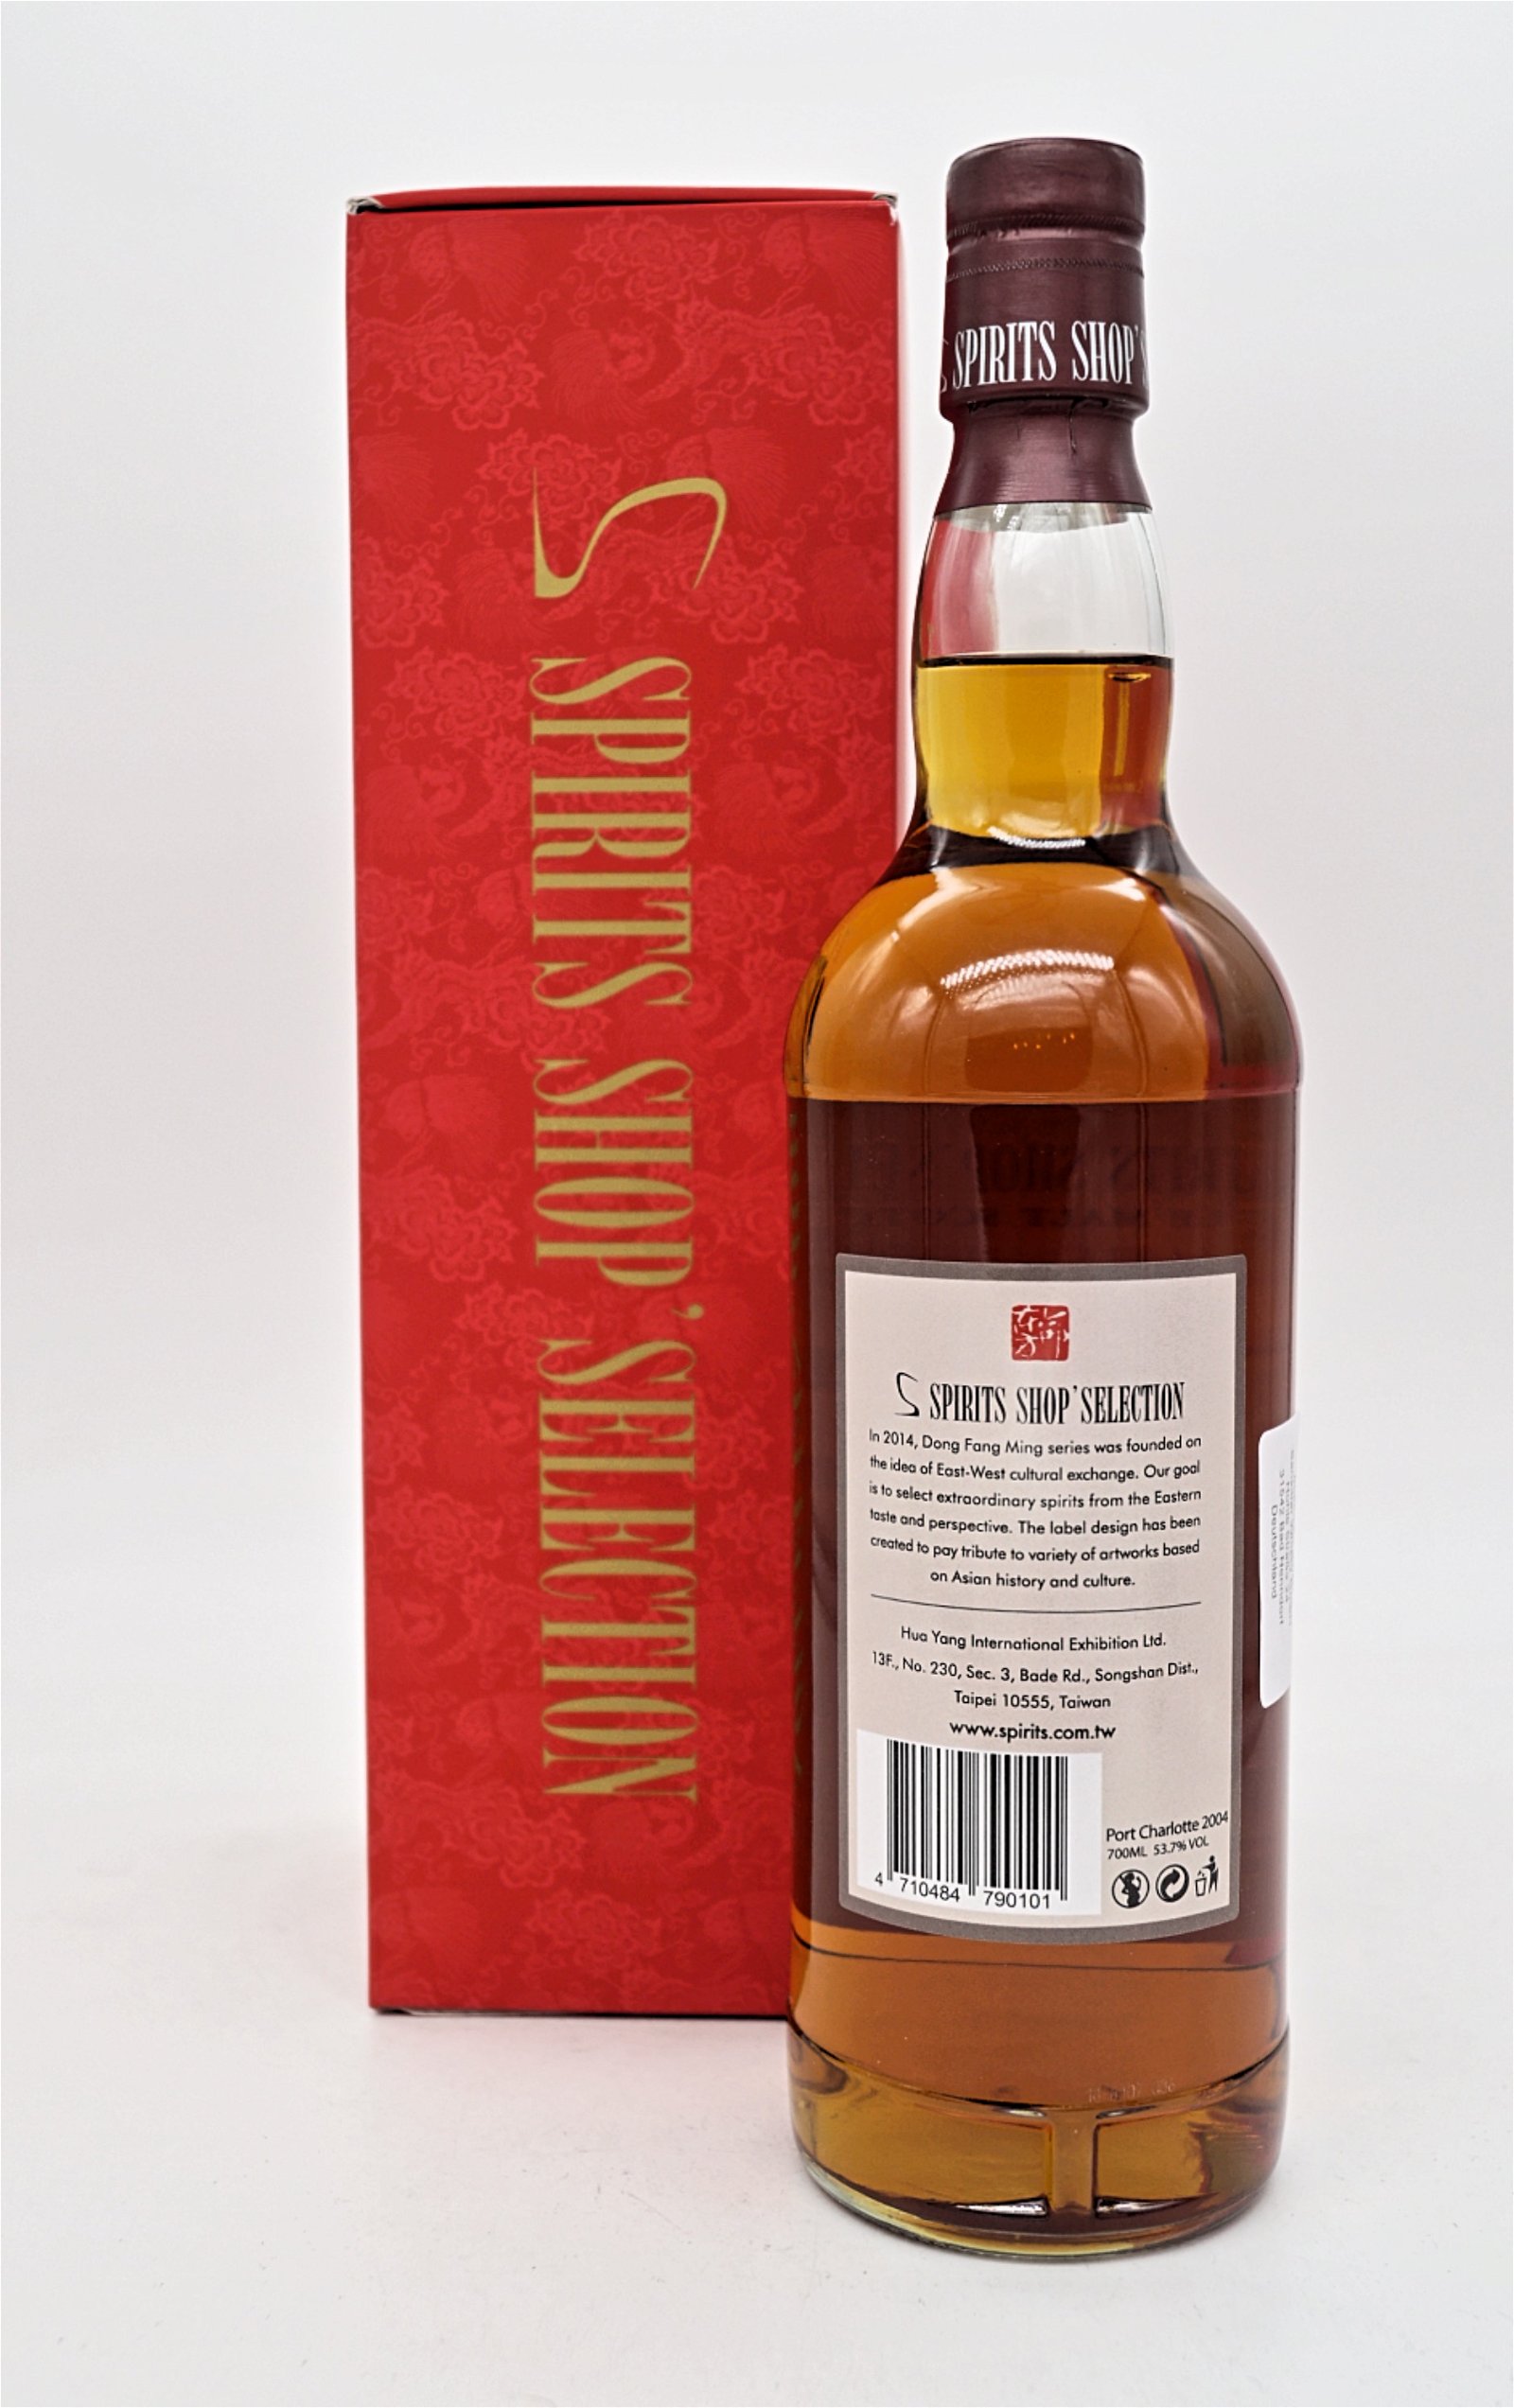 S-Spirits Shop Selection 13 Jahre Port Charlotte 2004/2018 Yquem Cask #1053 Single Cask Islay Single Malt Scotch Whisky